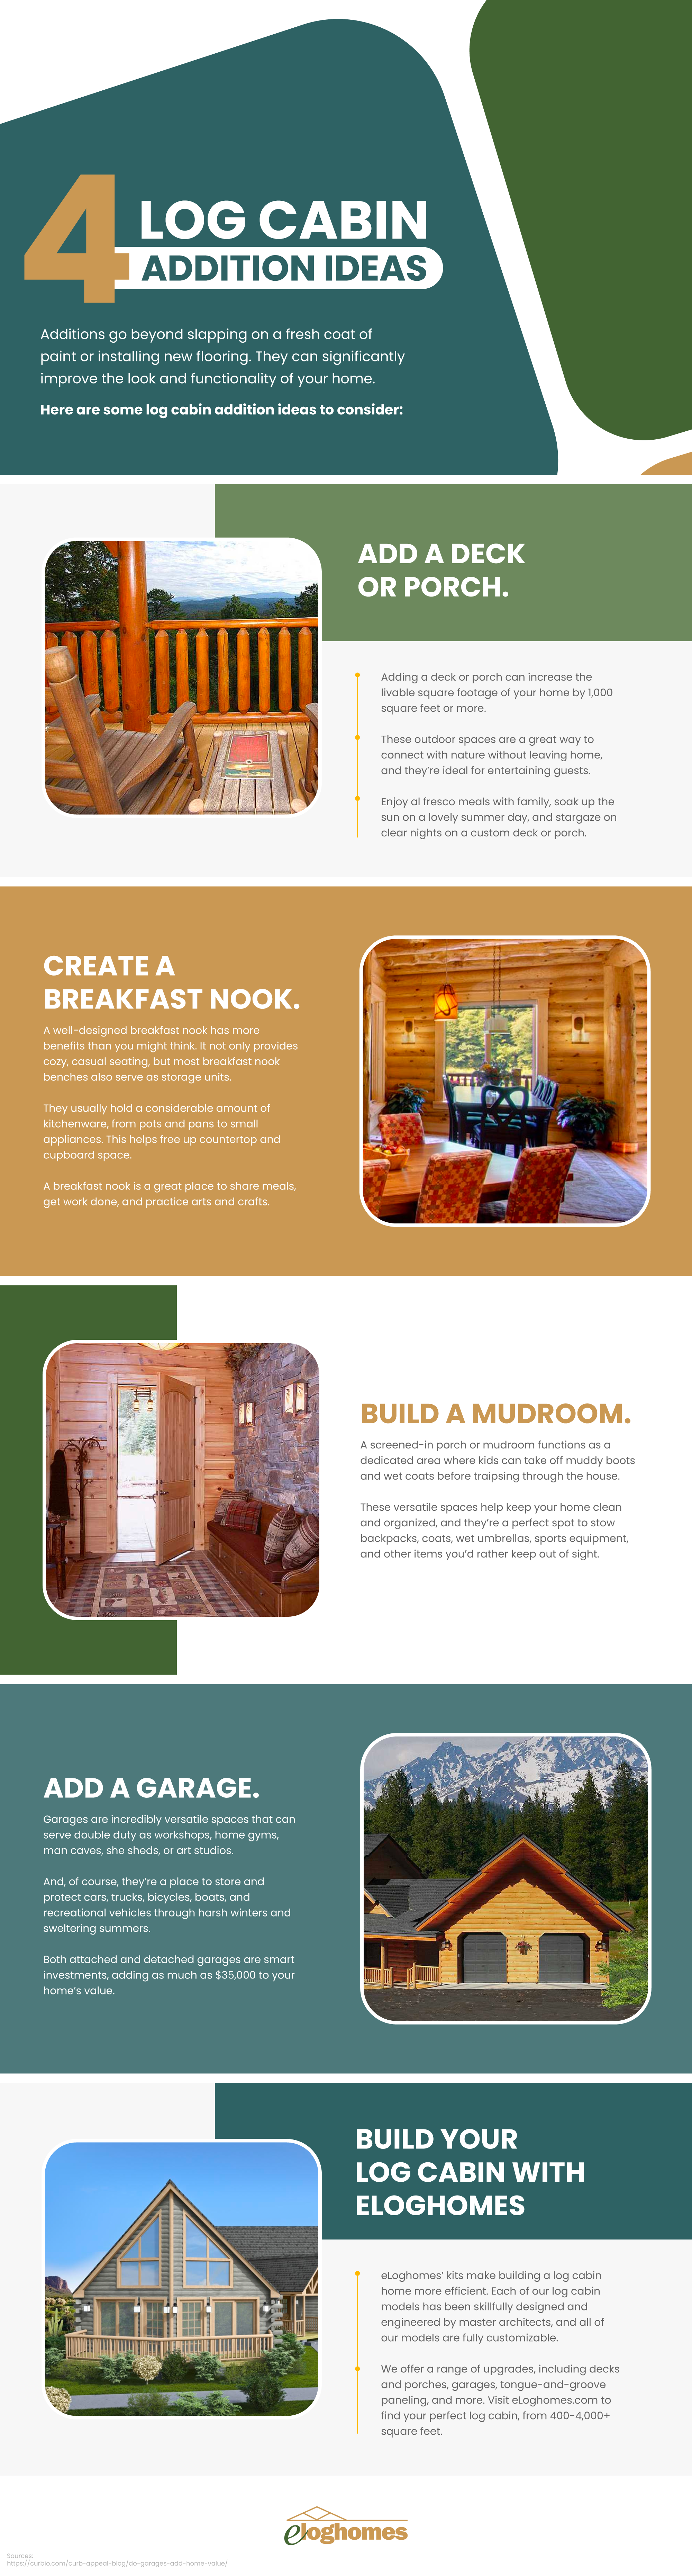 4 Log Cabin Addition Ideas